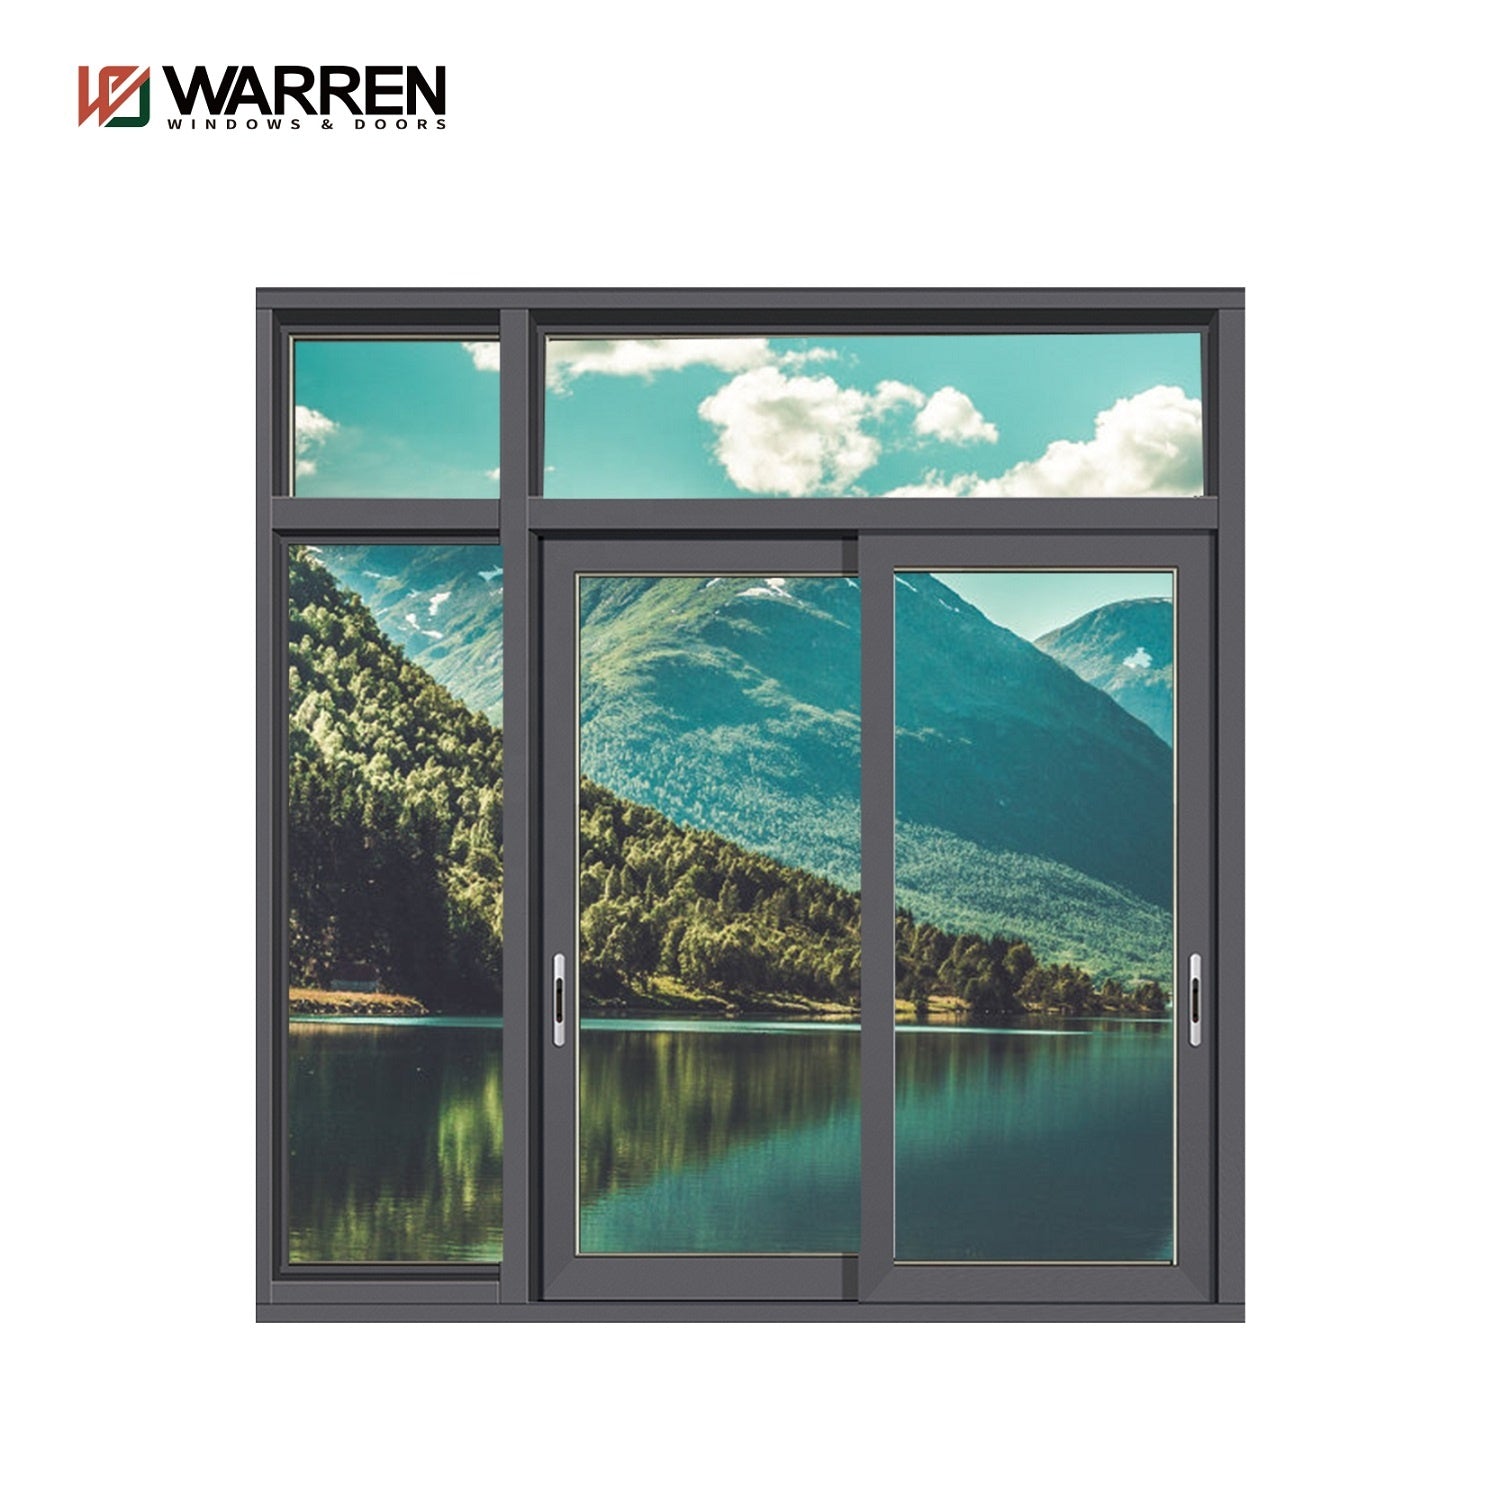 Warren made in china America standard sliding window 96x36 customized size doors